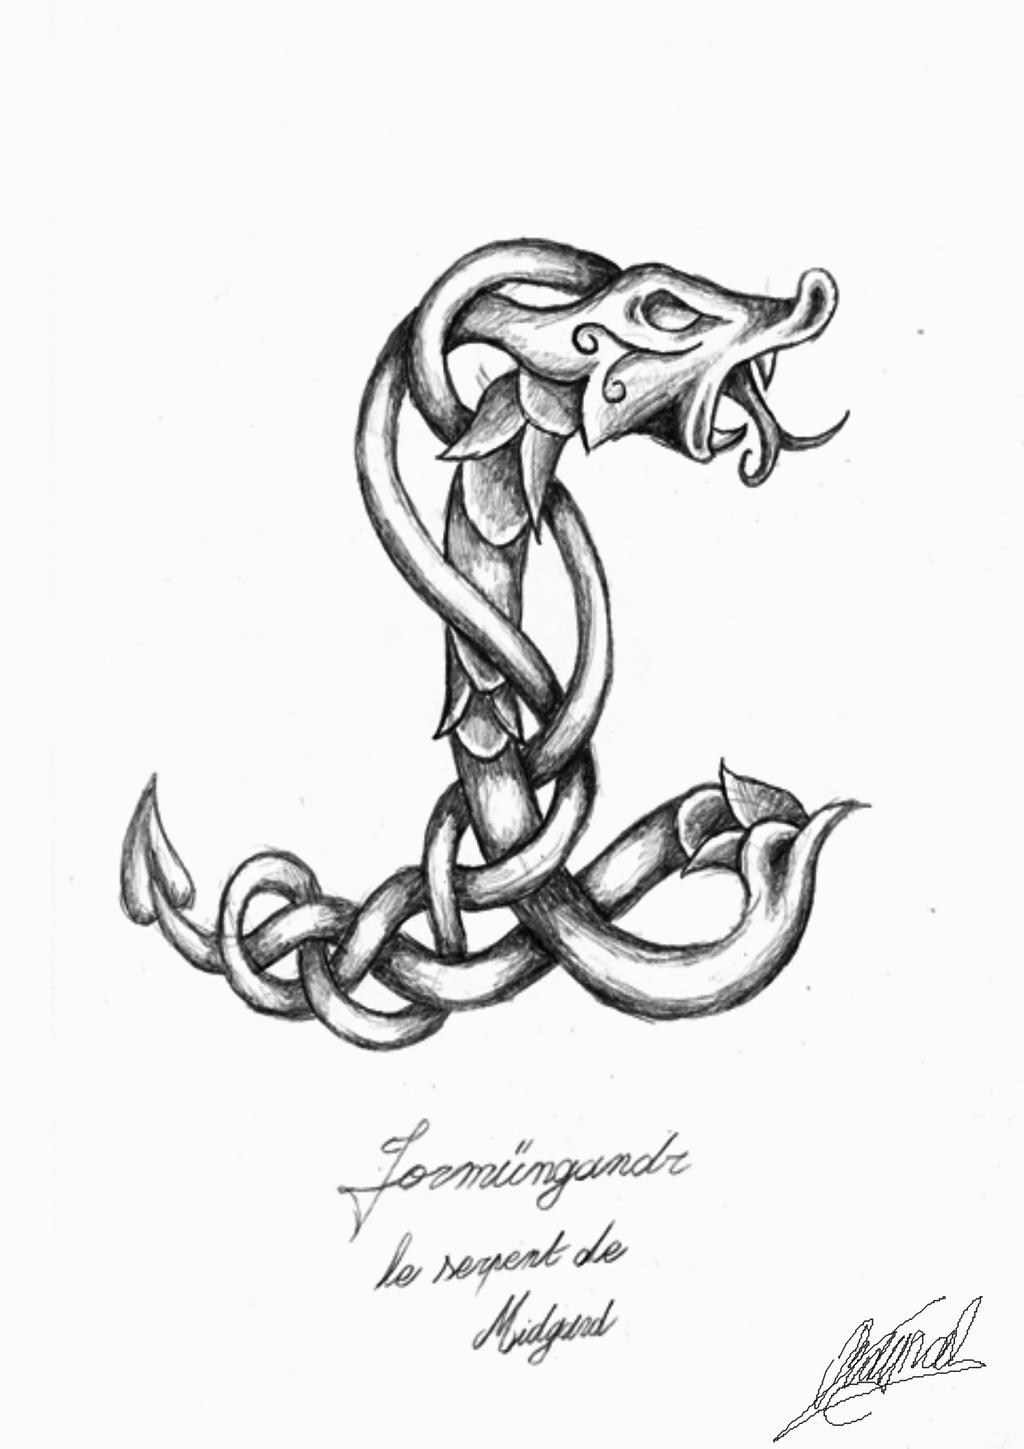 Jormungandr the serpent of Midgard by RaynalJacquemin on DeviantArt